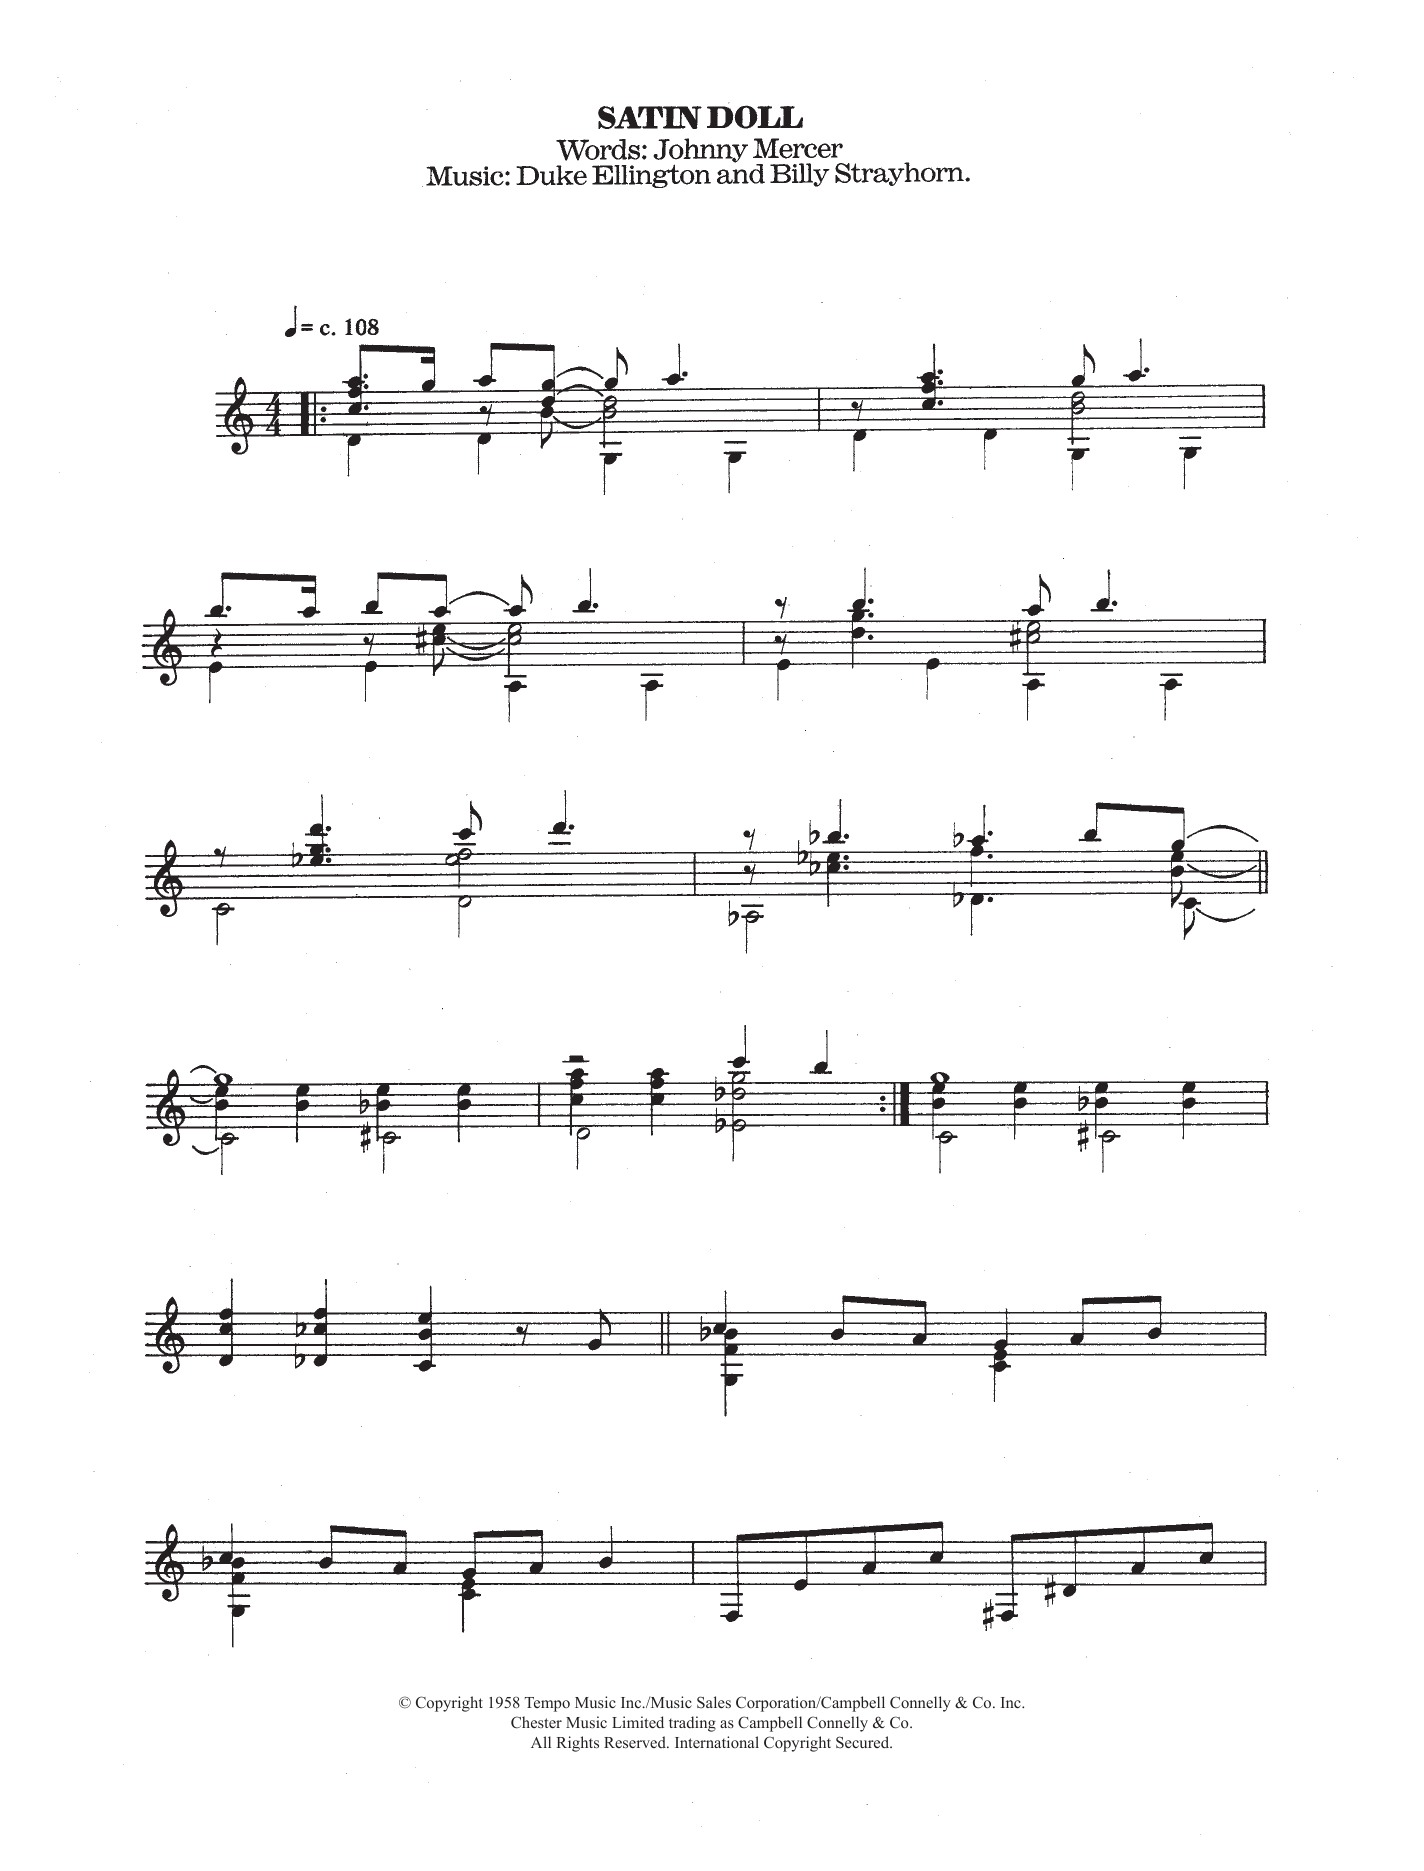 Duke Ellington & Billy Strayhorn Satin Doll Sheet Music Notes & Chords for Guitar - Download or Print PDF